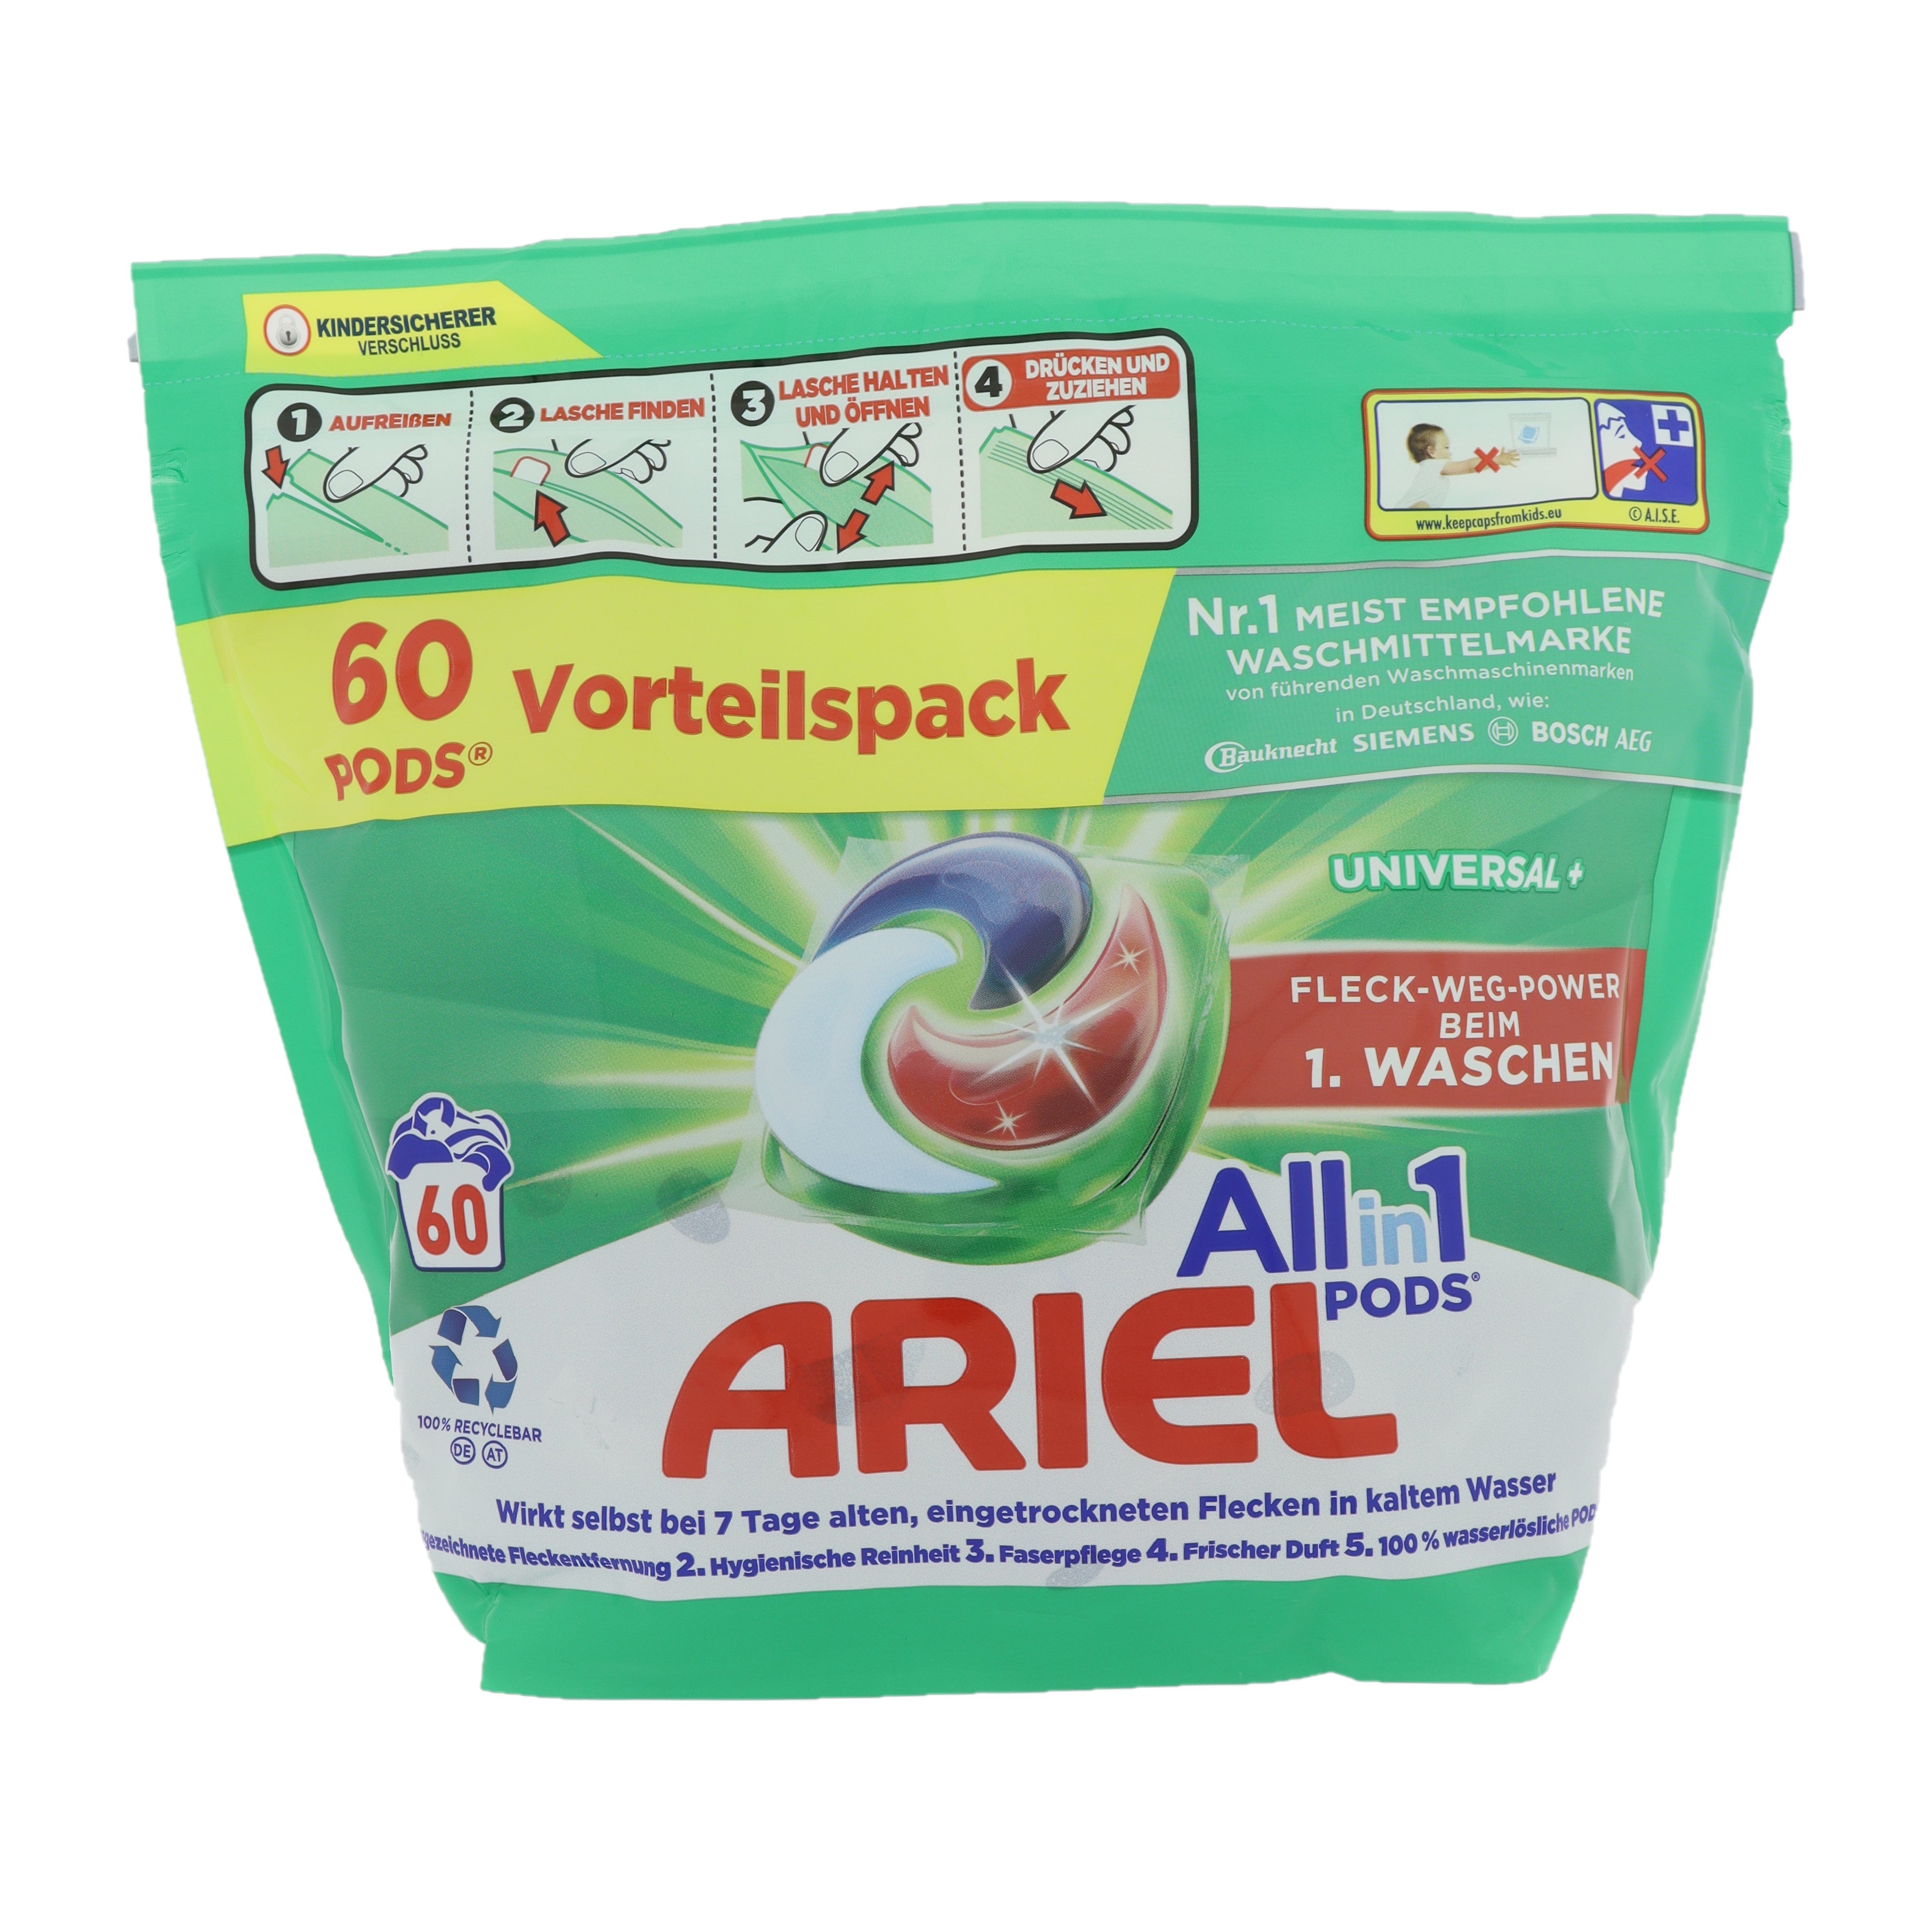 Ariel Original All-in-1 Pods 60 stuks